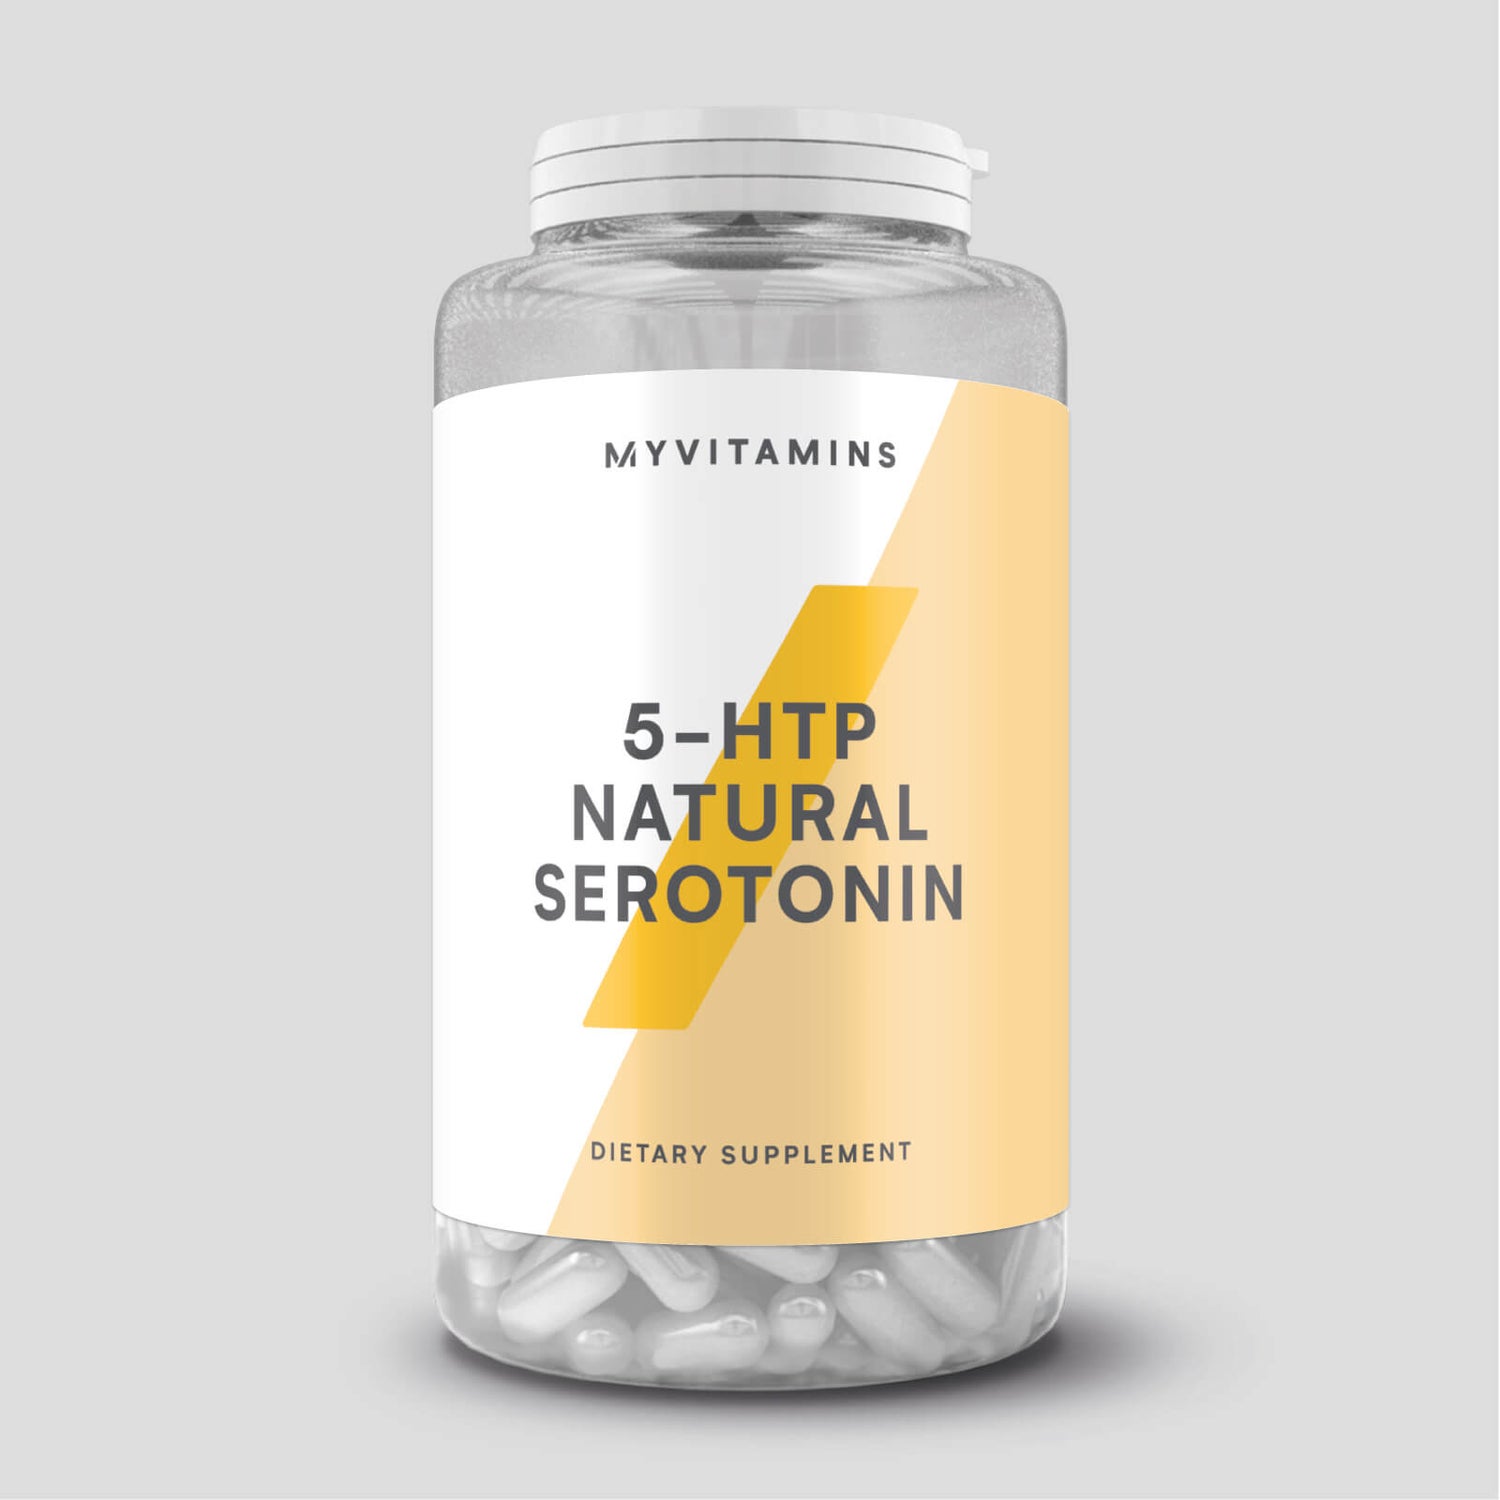 Myprotein 5 HTP Natural Serotonin - 90 Capsules (USA)